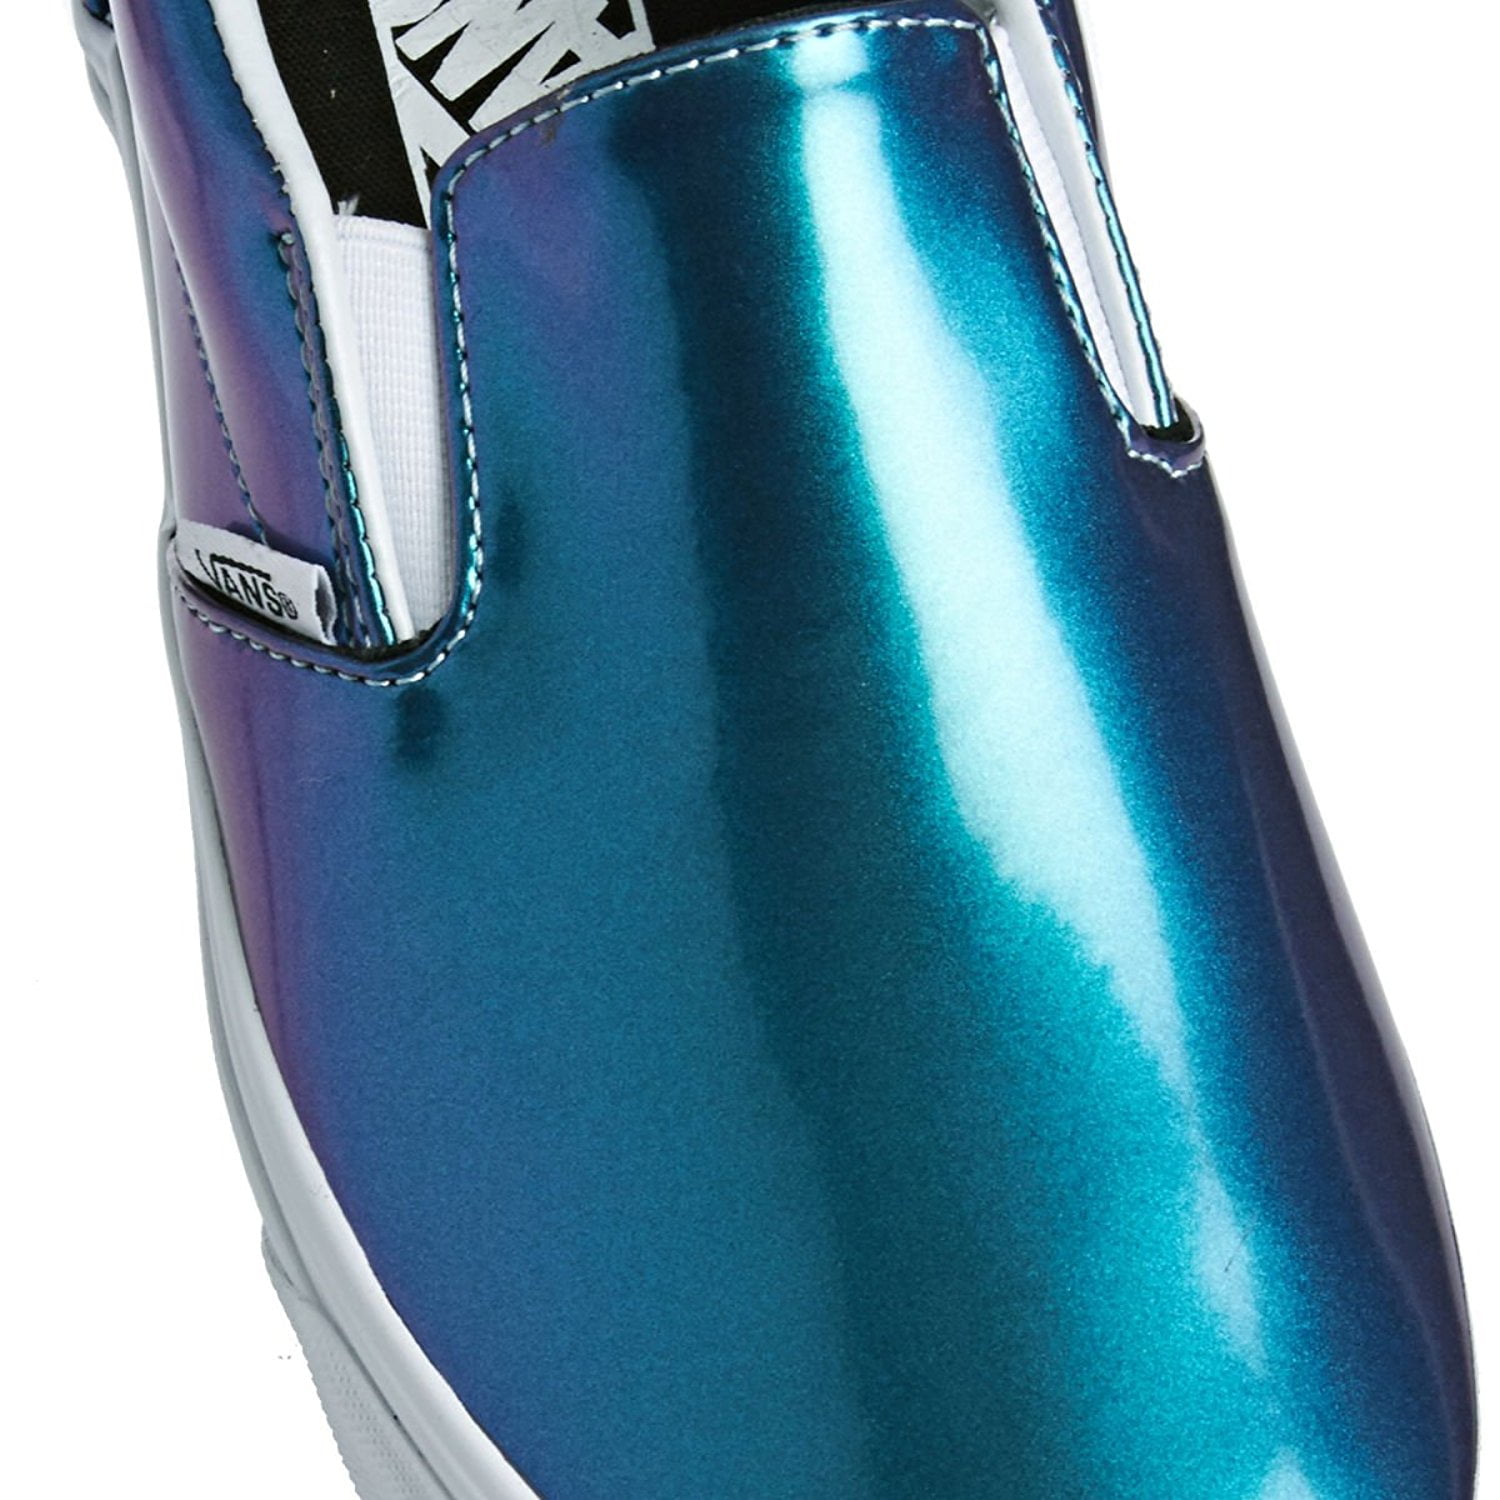 vans classic slip on patent leather blue iridescent